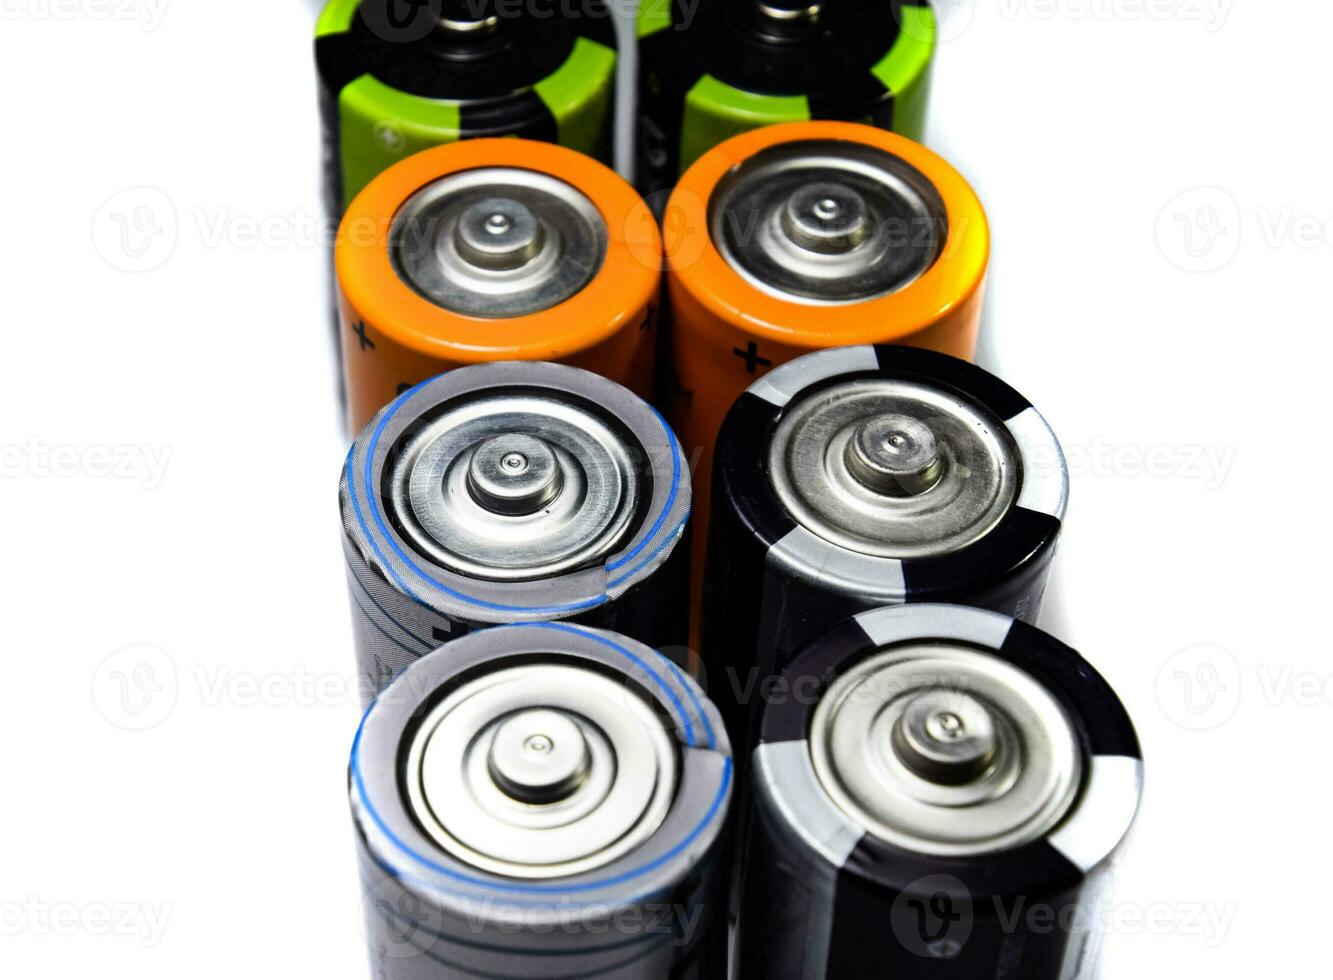 sale e alcalino batterie, fonte di energia per portatile tecnologia. aaa e aa batterie foto